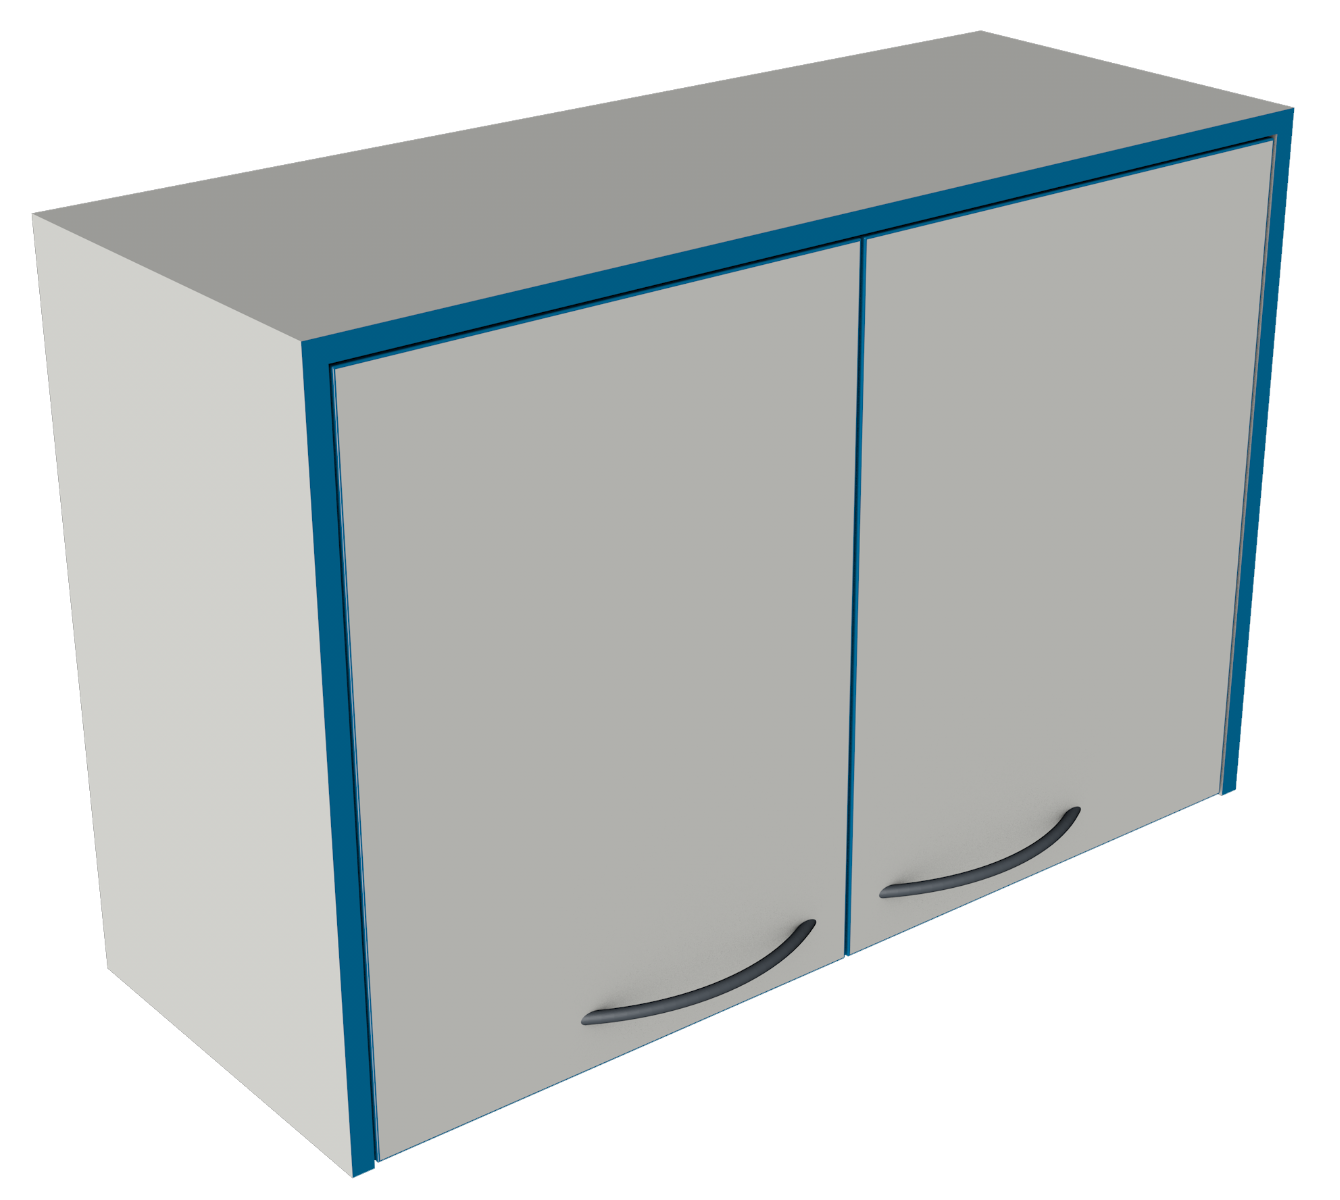 Sealwise wall cupboard